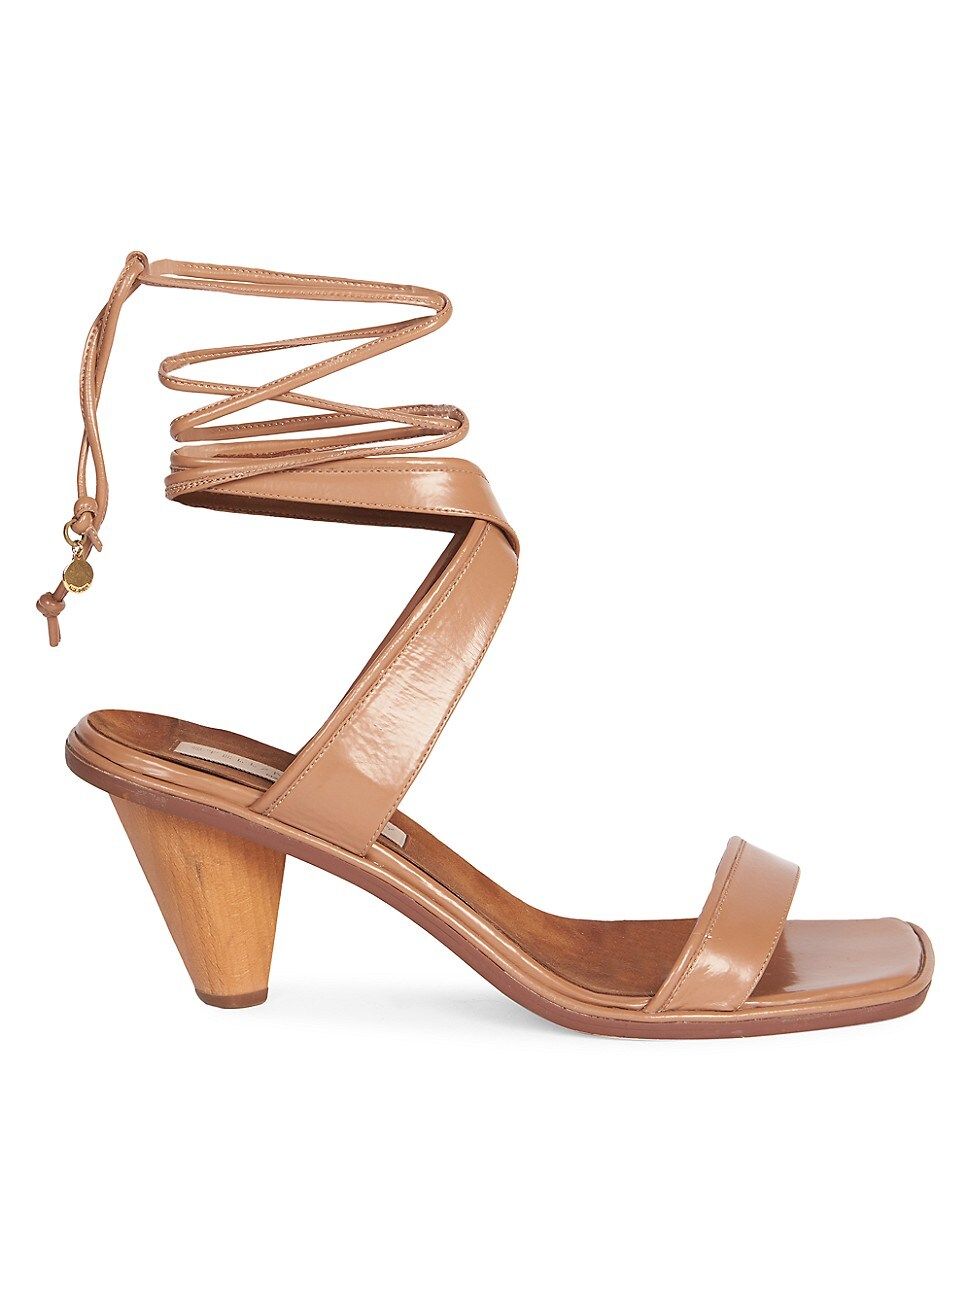 Stella McCartney Women's Rhea Lace-Up Sandals - Soft Camel - Size 7 | Saks Fifth Avenue